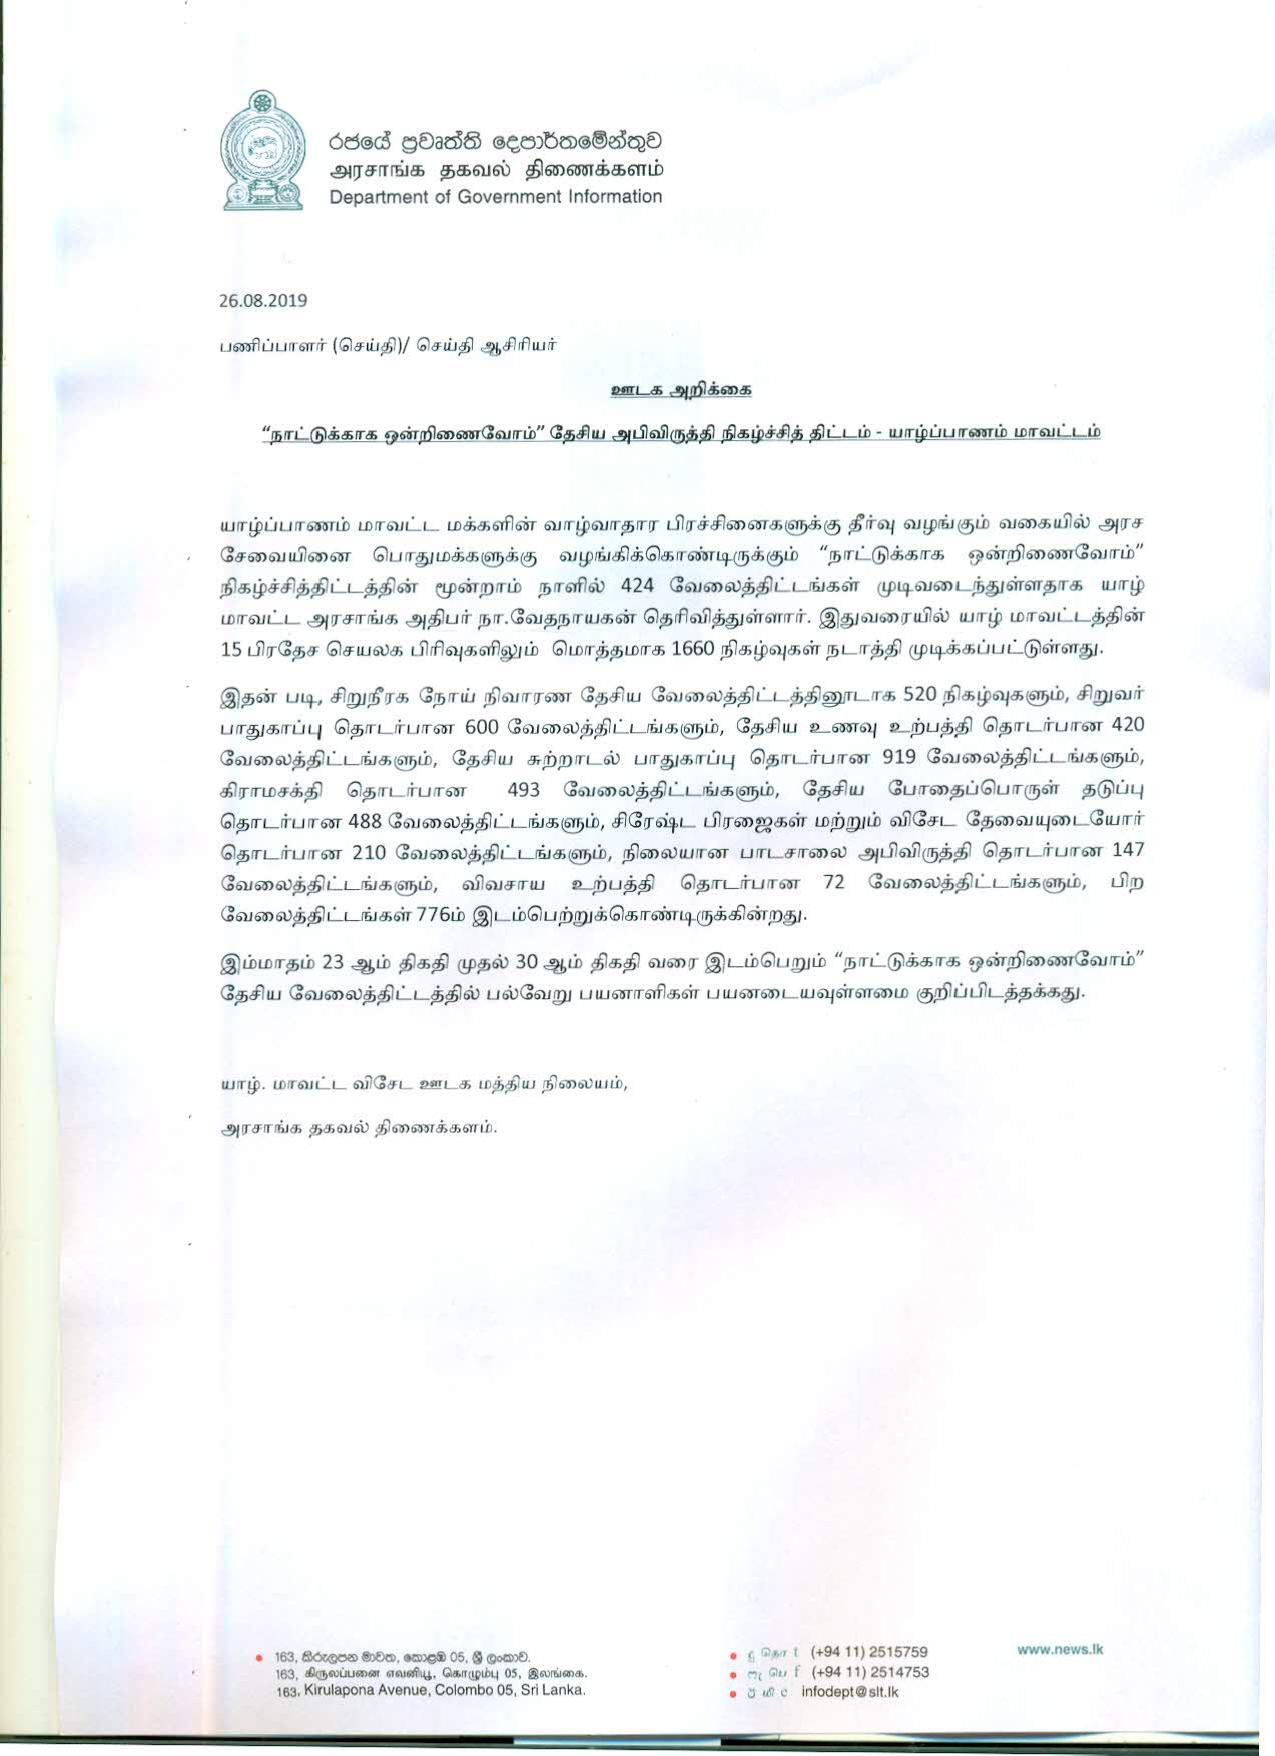 Media Release on 26.08.2019 Tamil 1 ddddd page 001